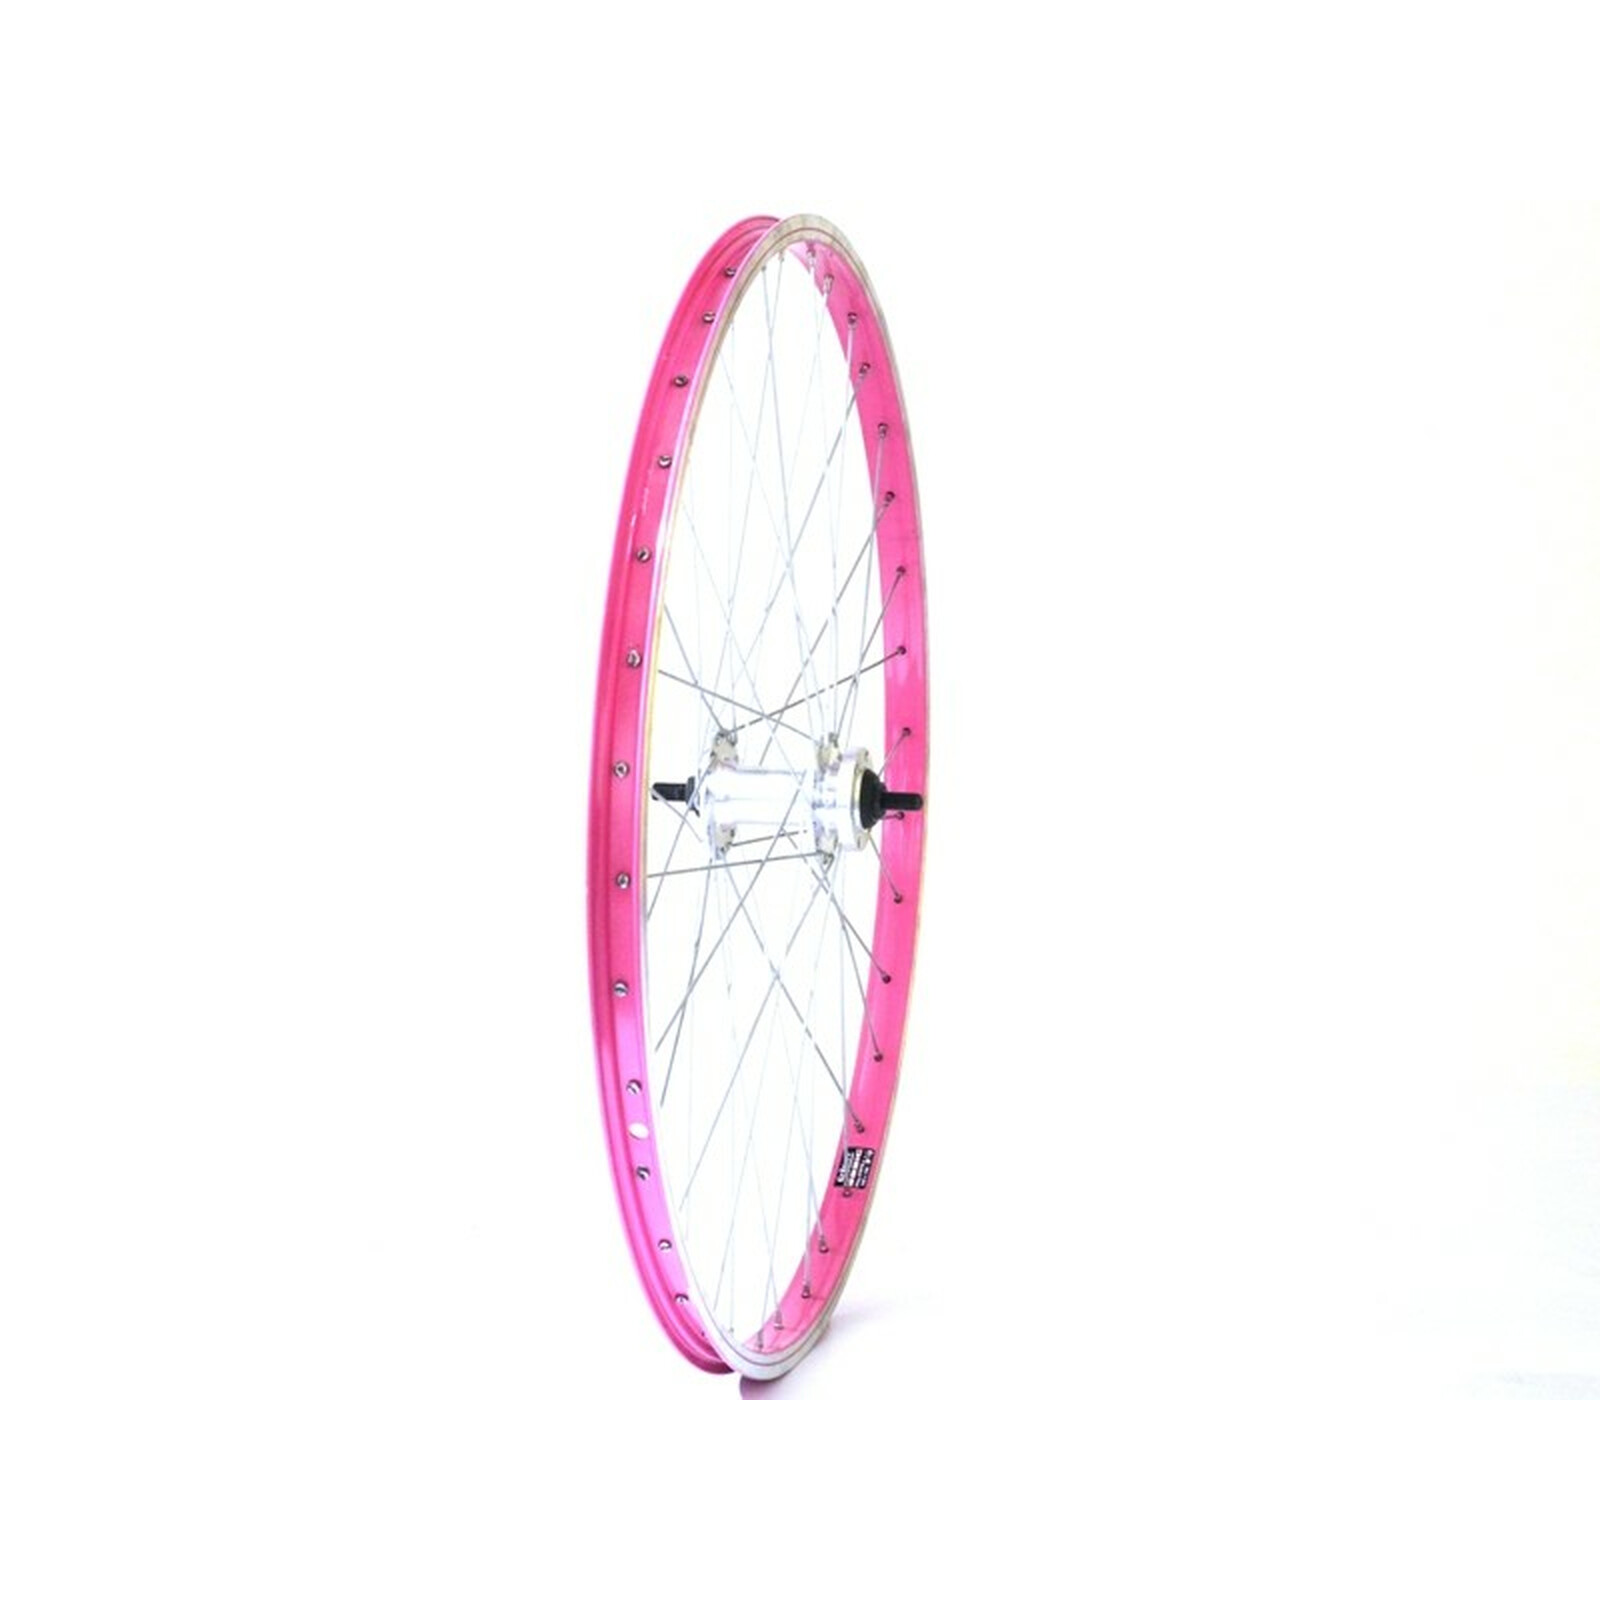 Reifen Redondo 28 Zoll Vorderrad Singlespeed Fixie Laufrad Felge Pink Pink 